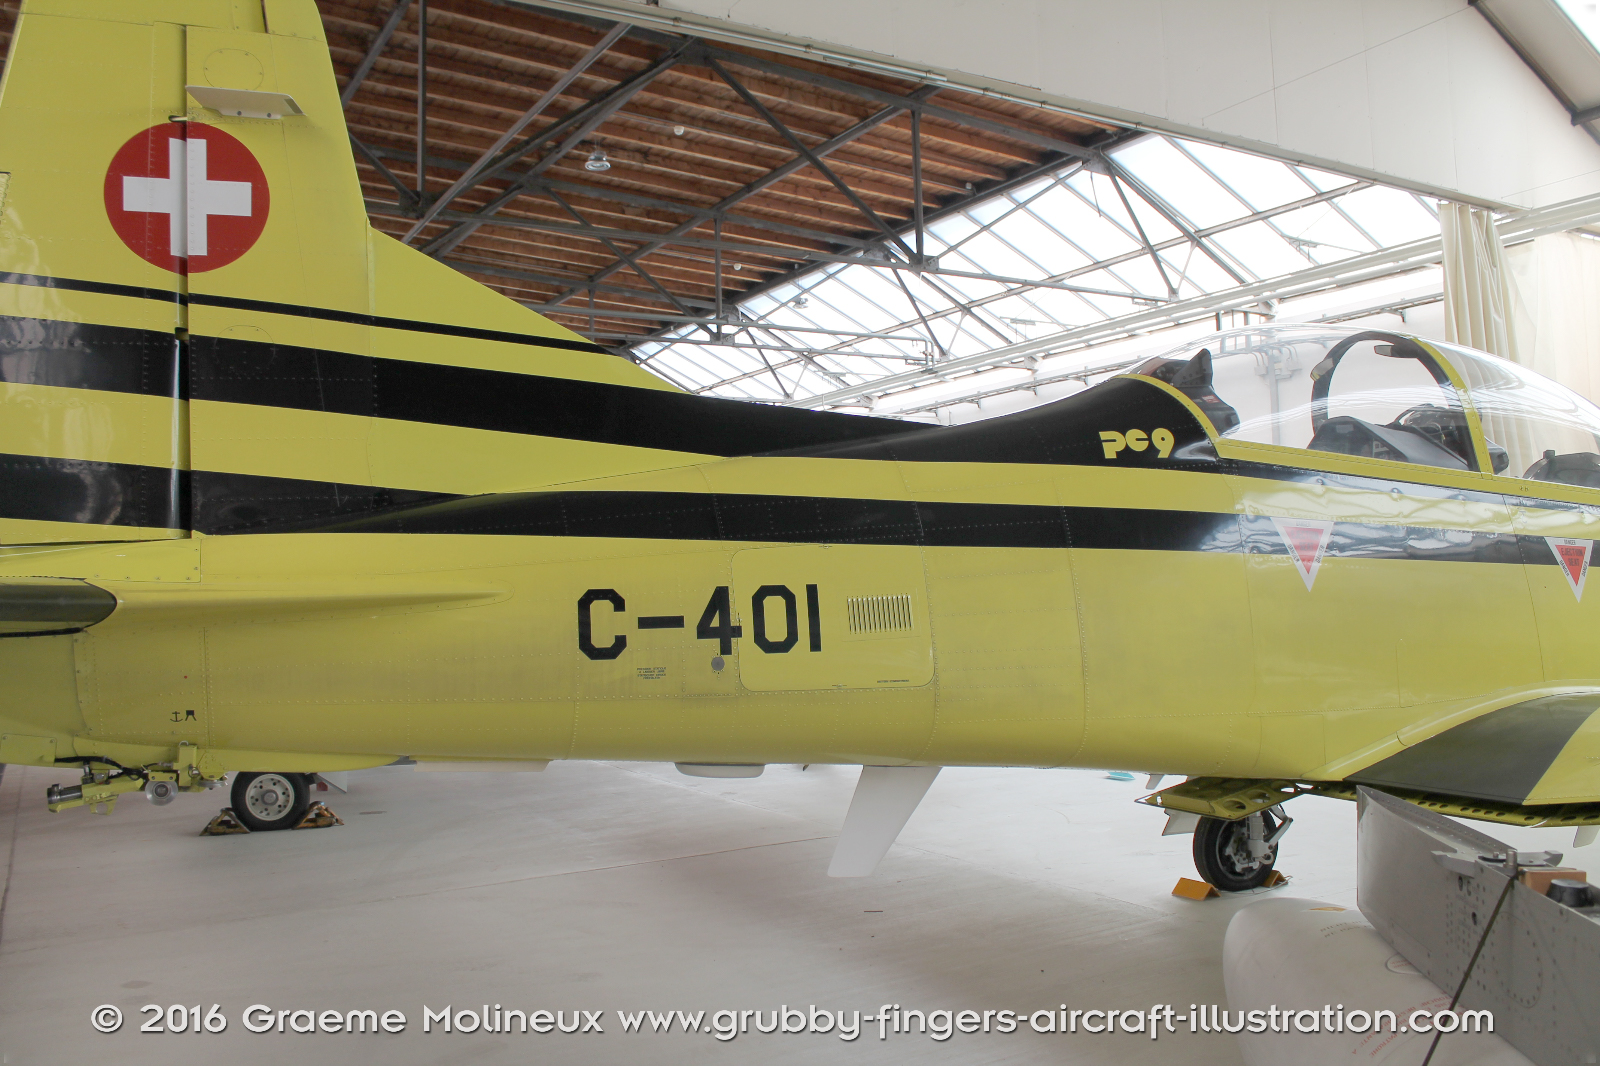 PILATUS_PC-9_C-401_Swiss_Air_Force_Museum_2015_12_GrubbyFingers